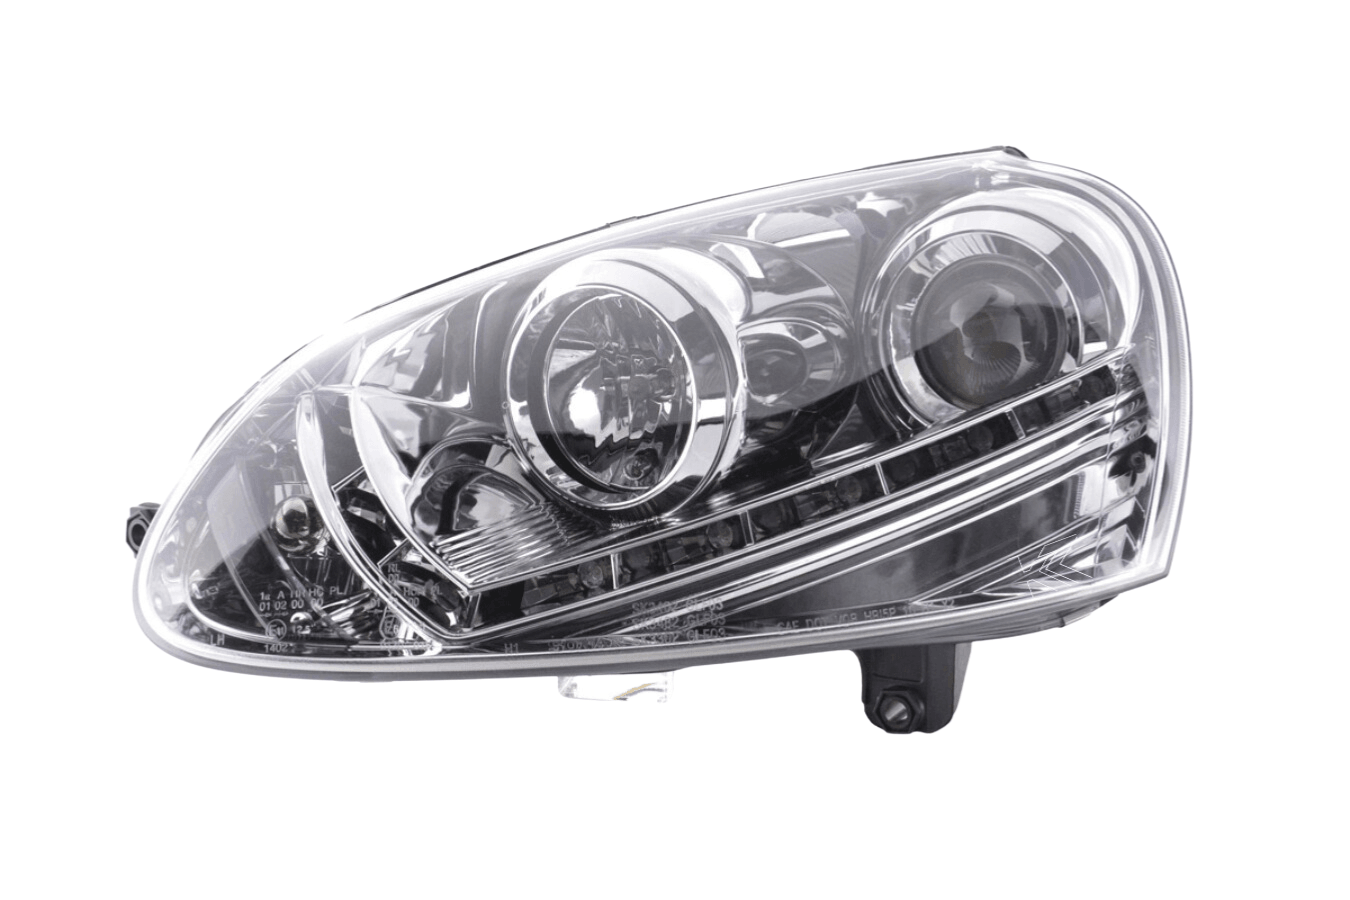 Volkswagen Golf 5 Chrome LED Headlights with Daytime Running Lights (2003 - 2008) - K2 Industries